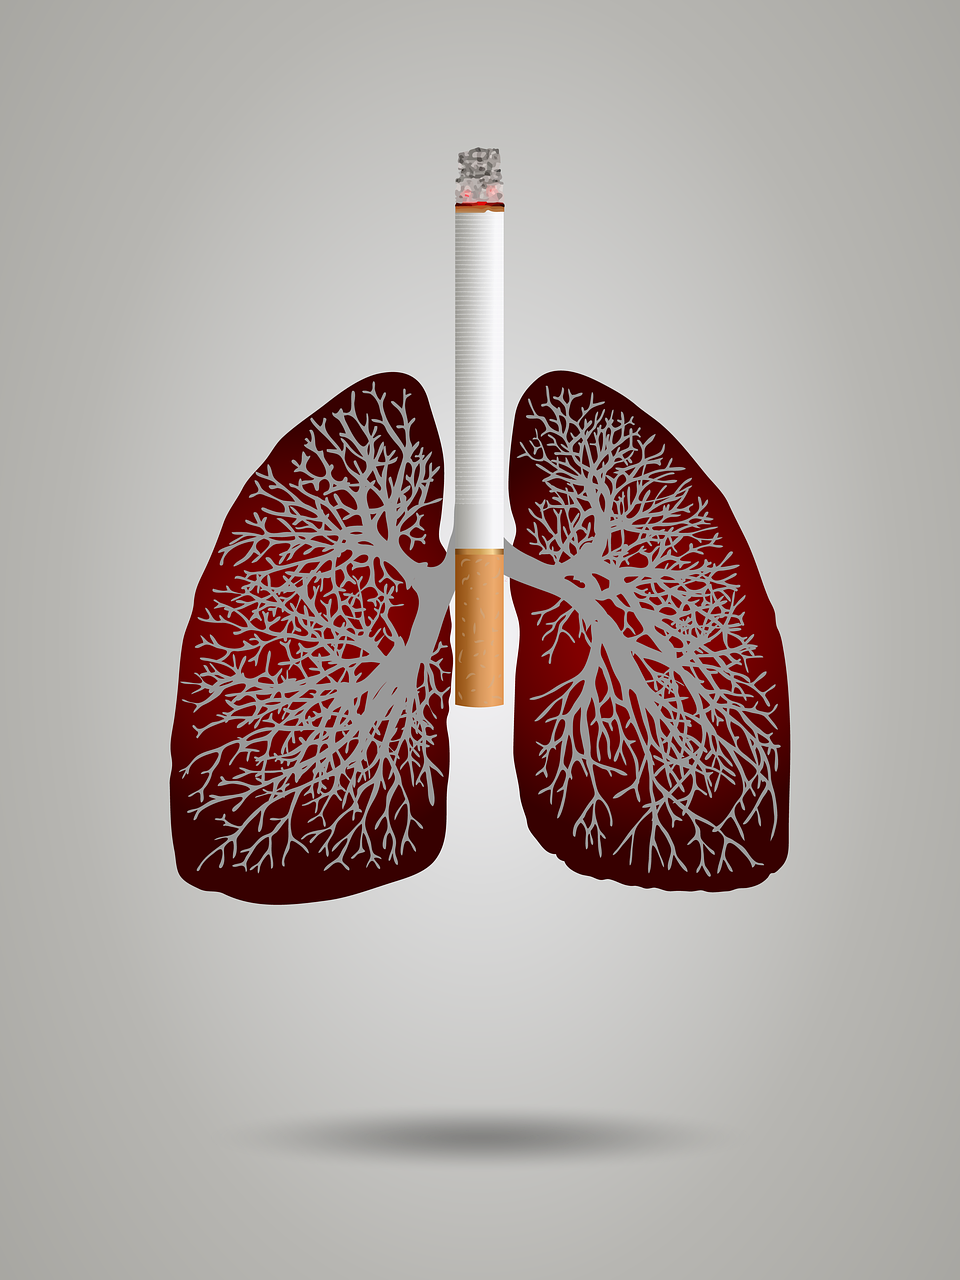 21世纪的肺癌——<font color="red">发病人群</font>和肿瘤特征的20年演变